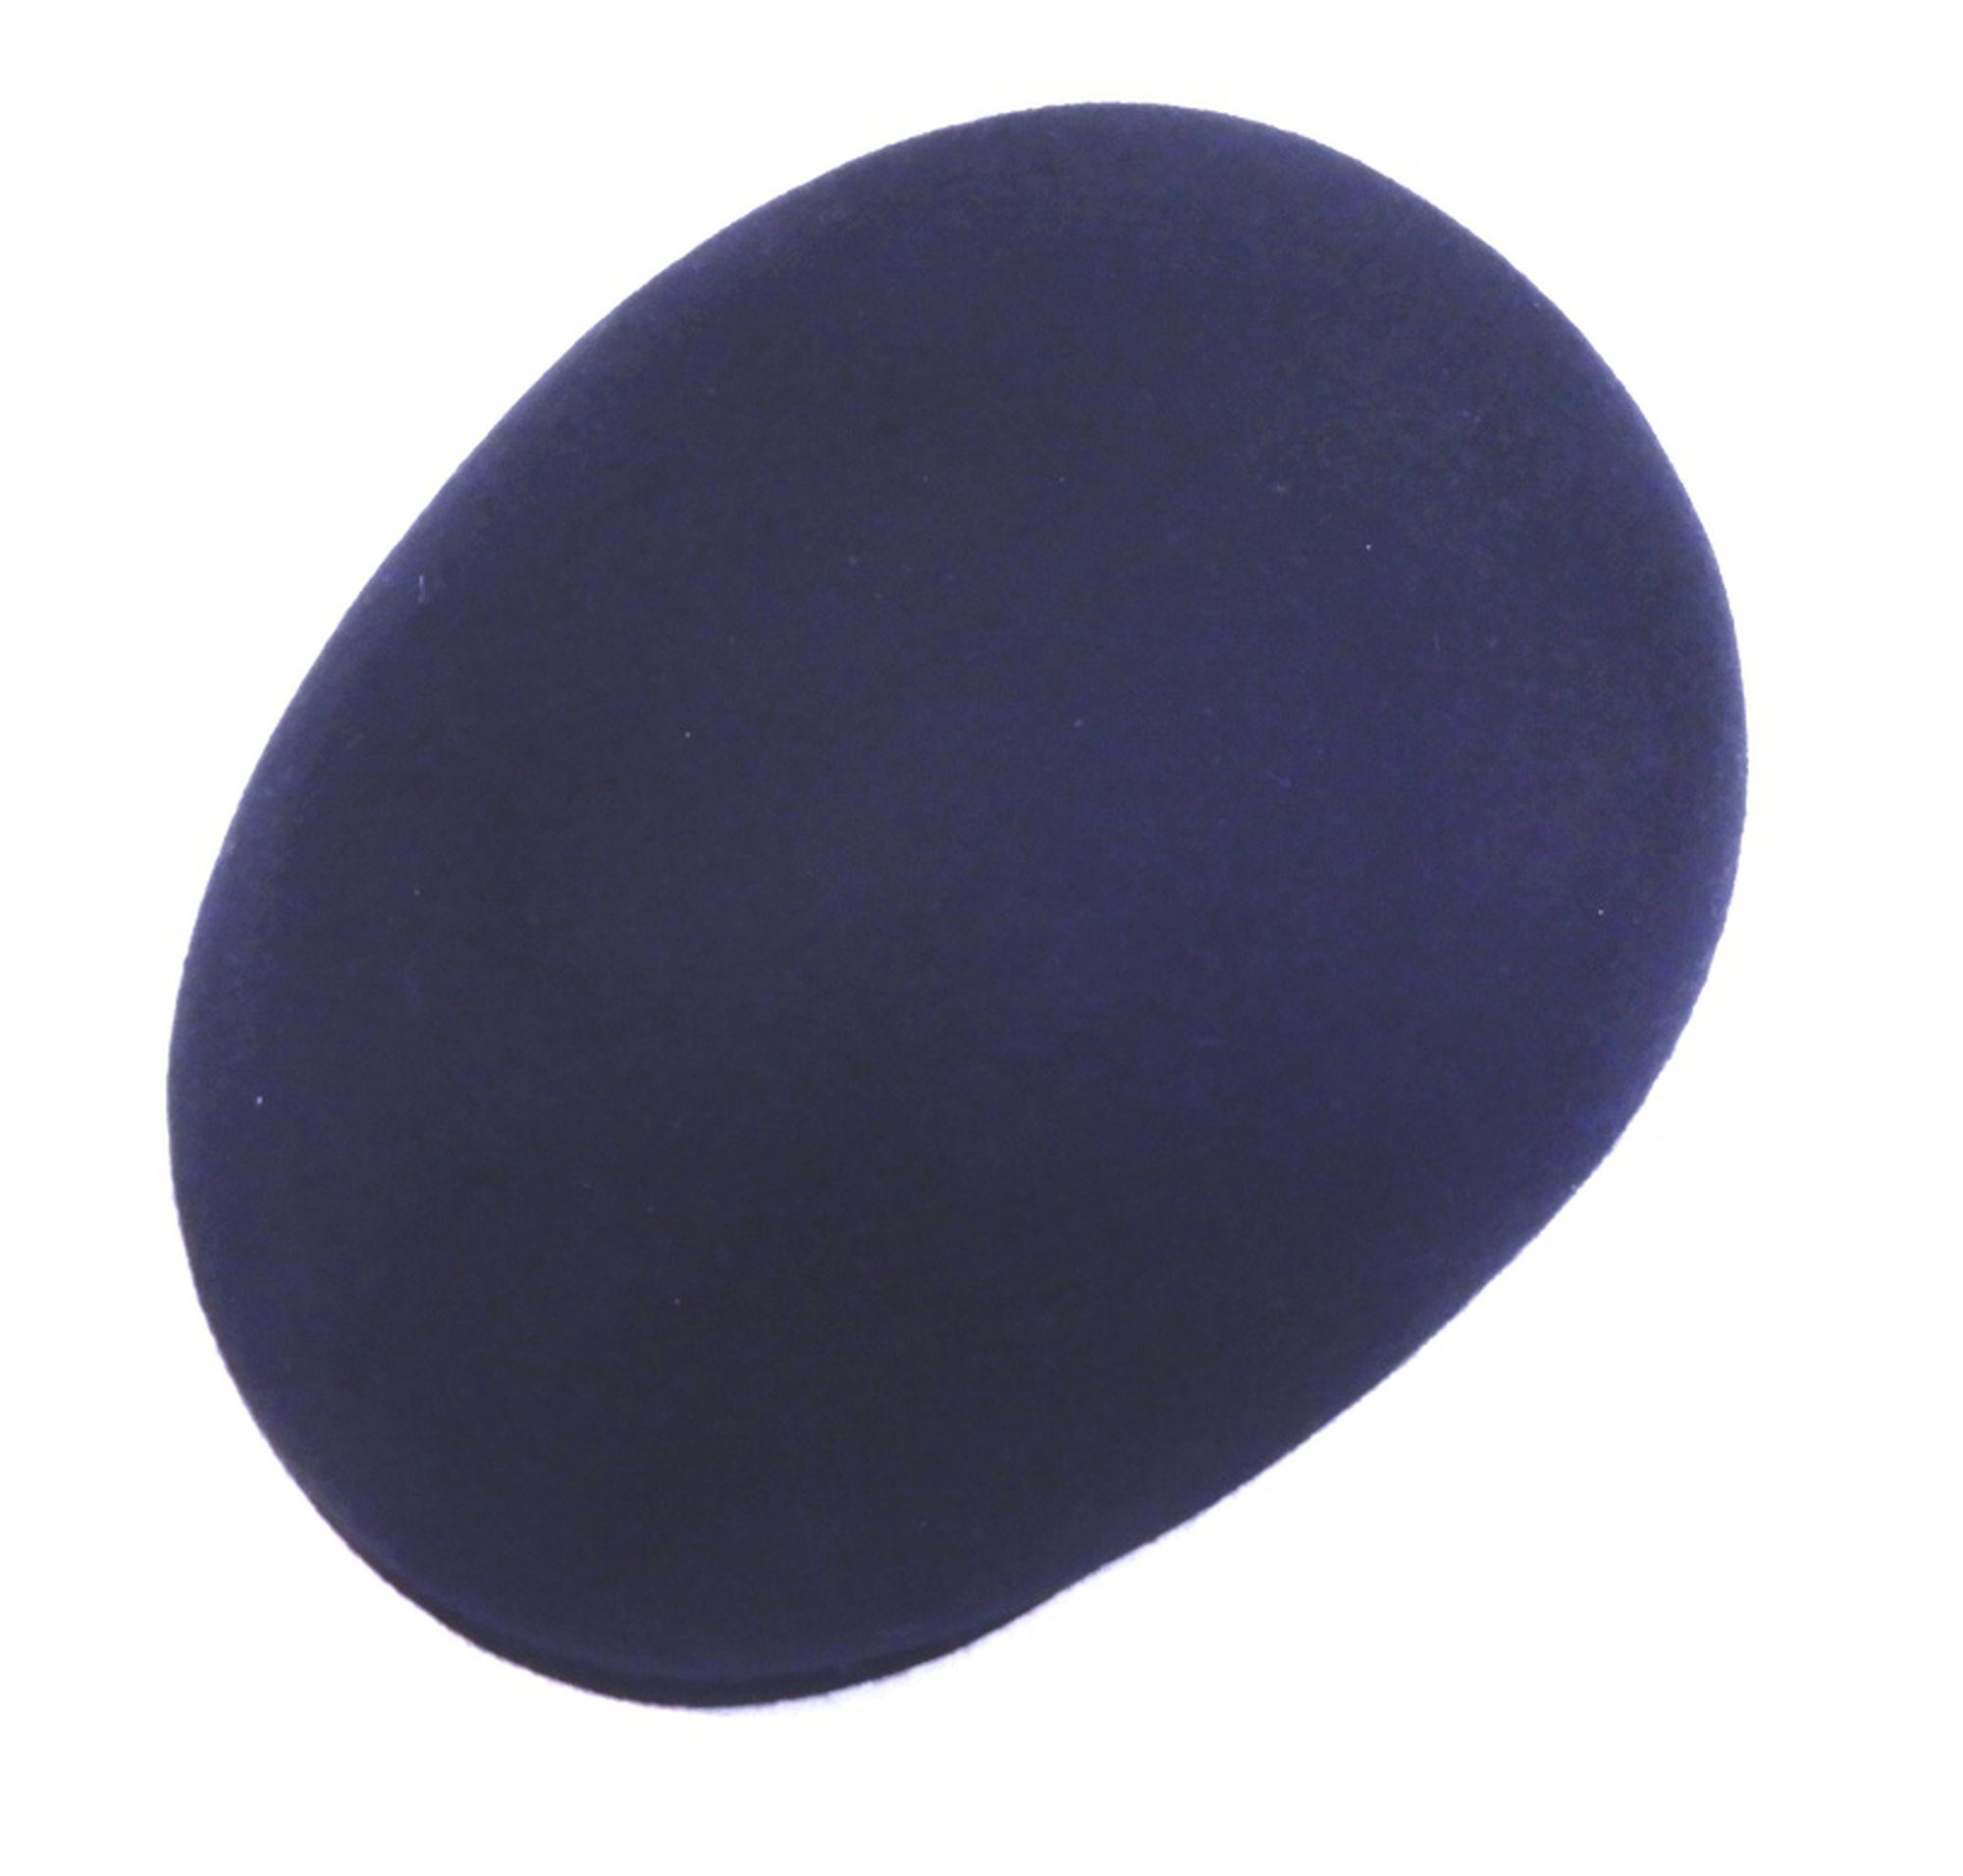 Cap dunkelblau aus hochwertigem Flat Chaplino Wollfilz